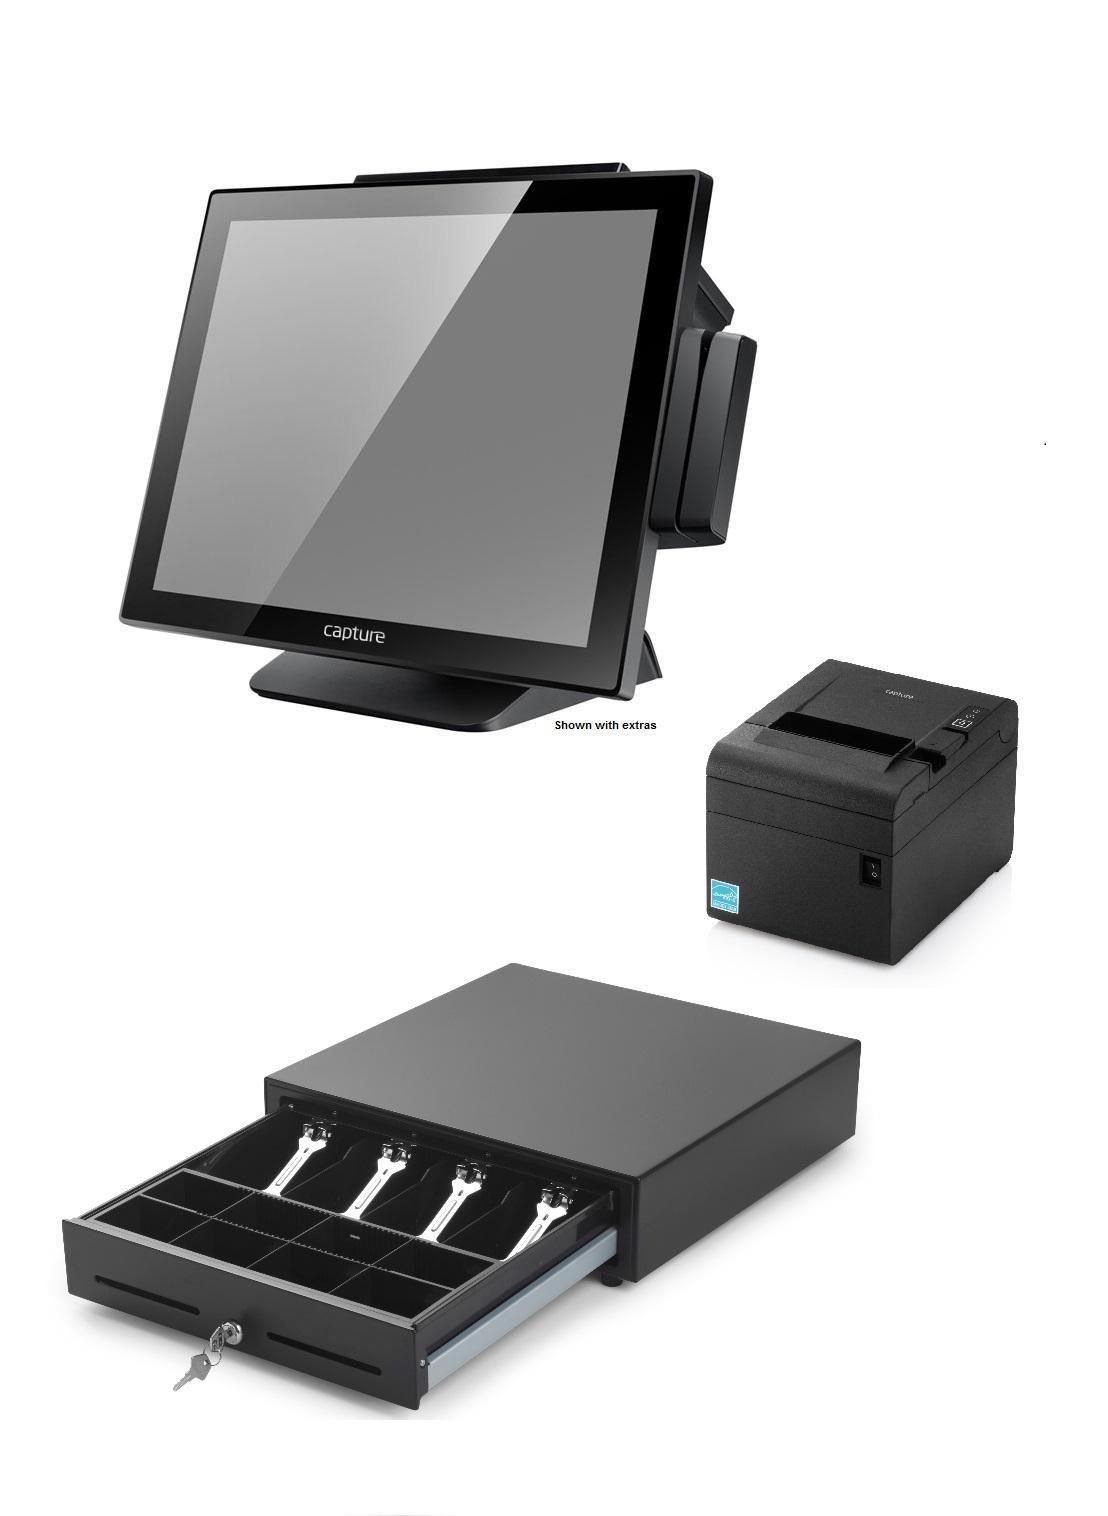 Capture POS In a Box,  Swordfish POS system + Thermal Printer + 410 mm Cash Drawer0 